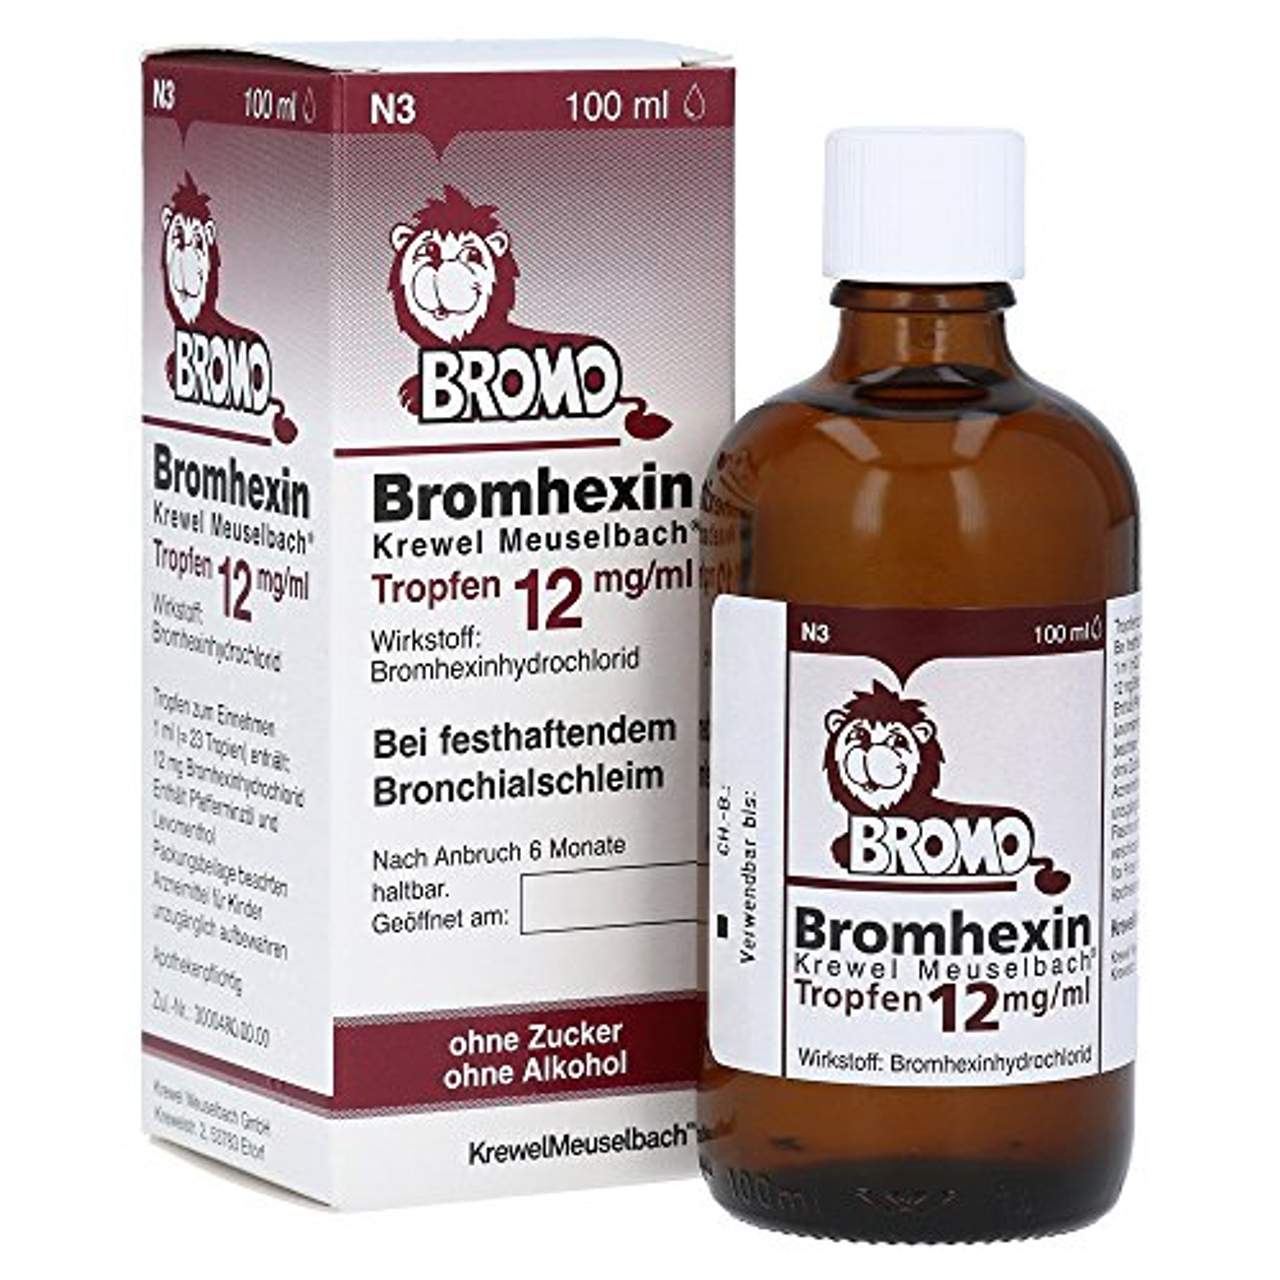 Bromhexin Krewel Meuselbach Tropfen 12 mg/ml